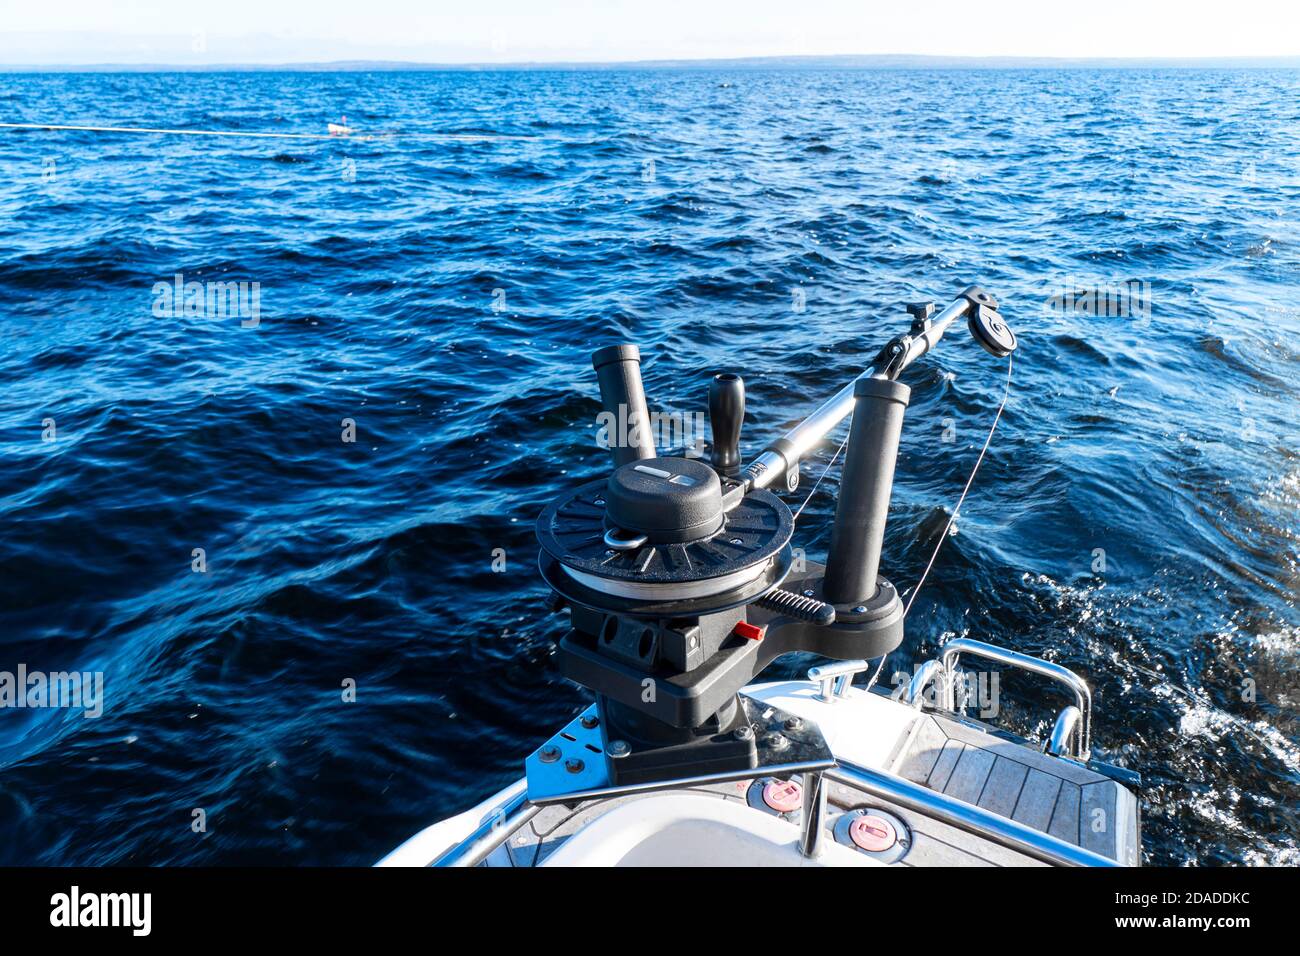 https://c8.alamy.com/comp/2DADDKC/fishing-equipment-on-boat-downrigger-boat-gear-for-trolling-fishing-boat-with-down-rigger-trolling-in-blue-ocean-fisherman-boat-in-the-sea-2DADDKC.jpg